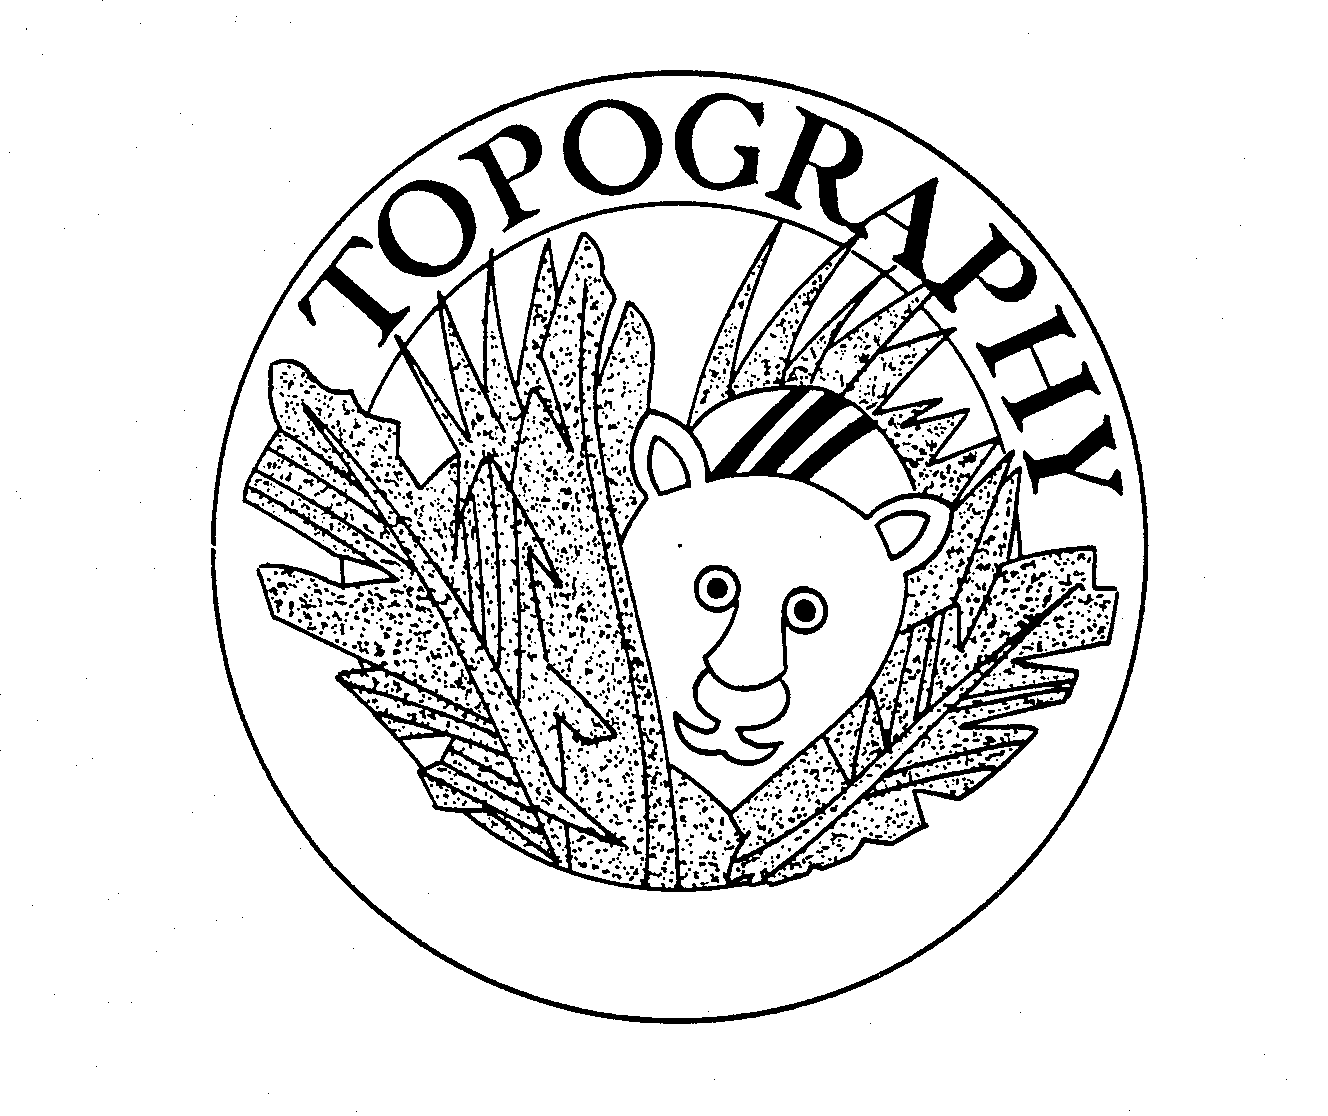 TOPOGRAPHY